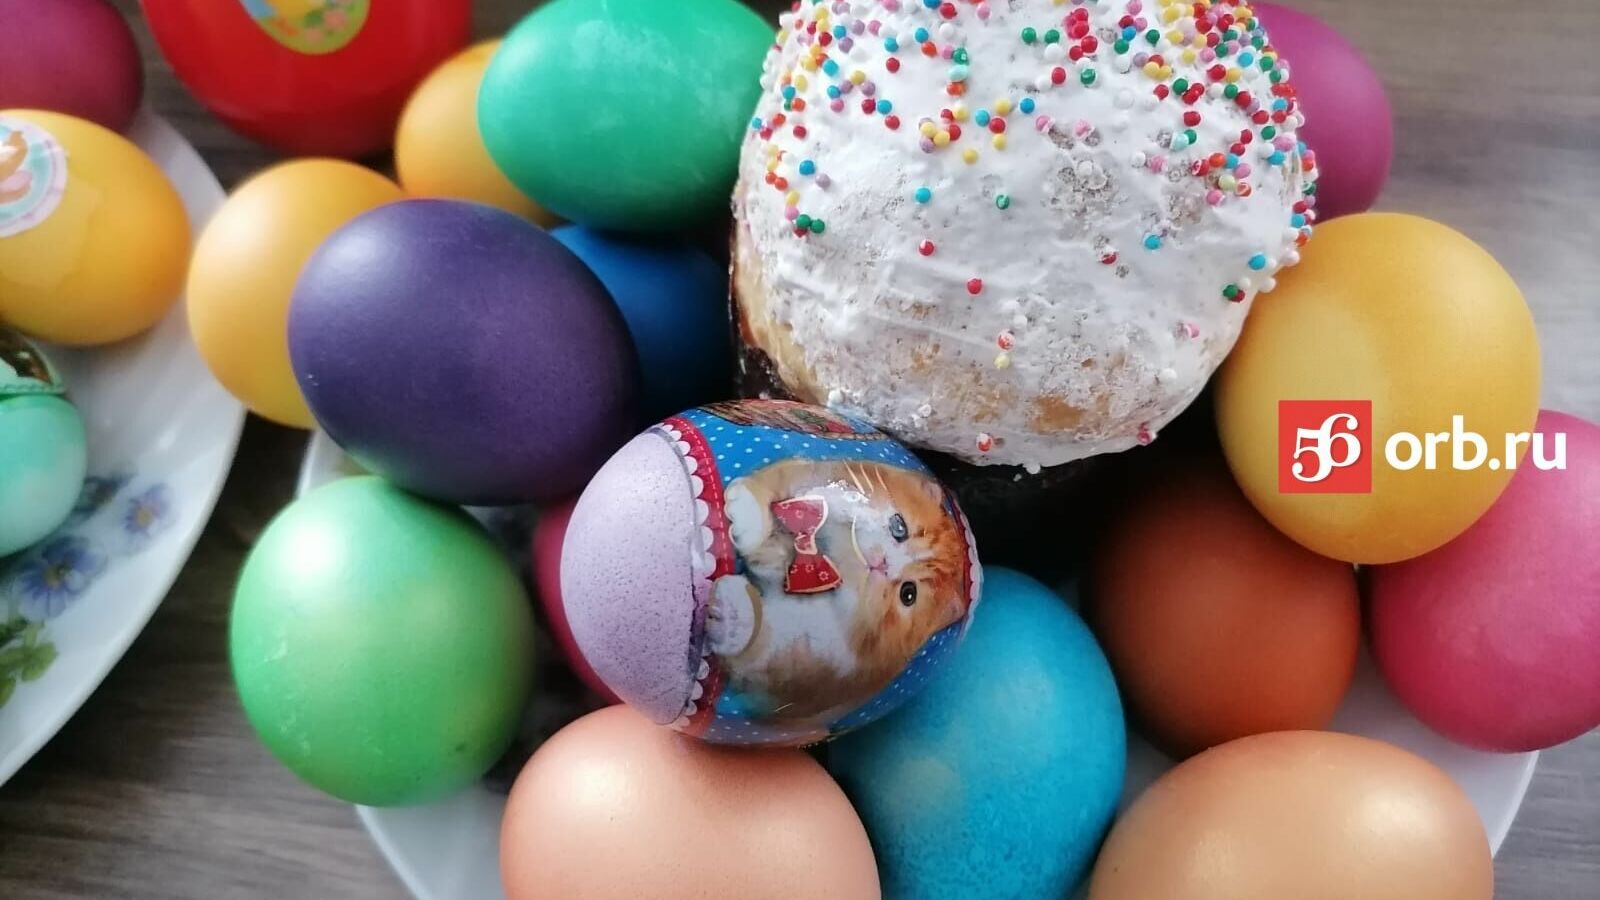 Крашеные яйца - символ Пасхи